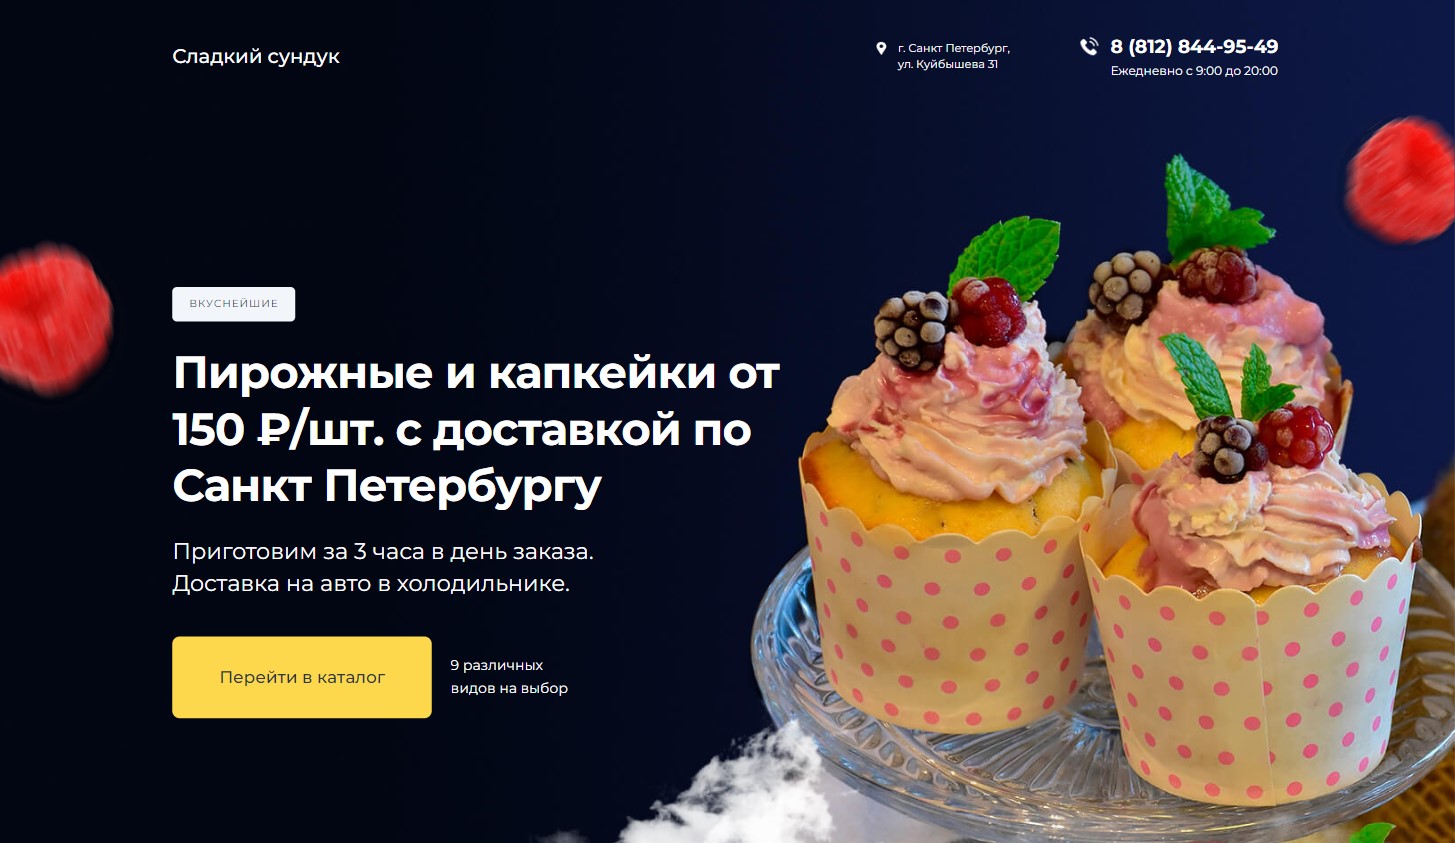 Cupcakes site image